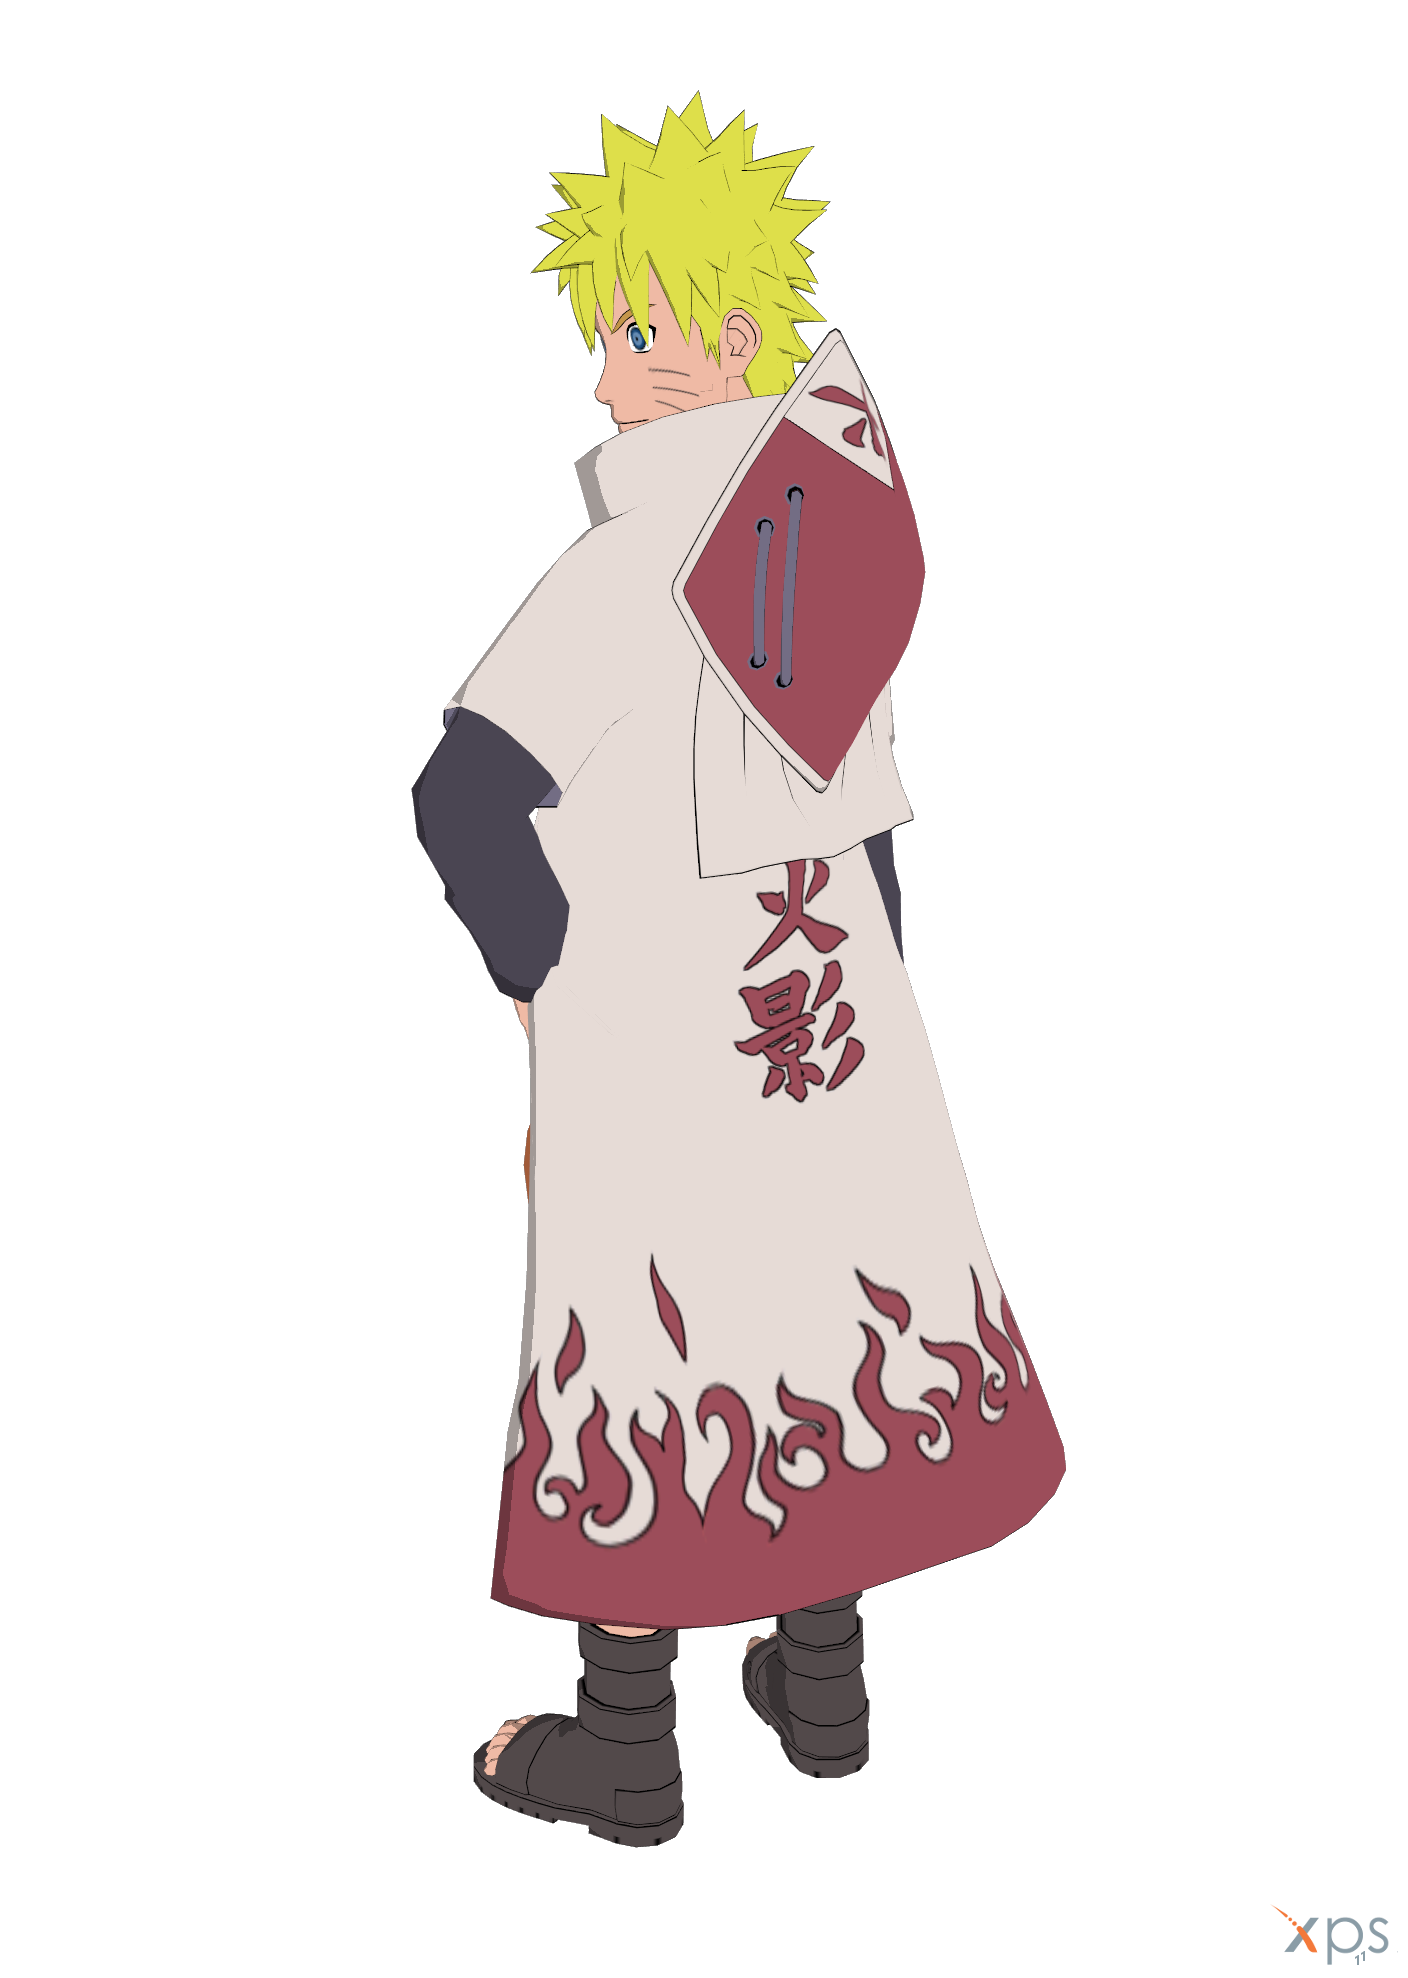 Naruto Uzumaki (Hokage Cloak) by LorisC93 on DeviantArt